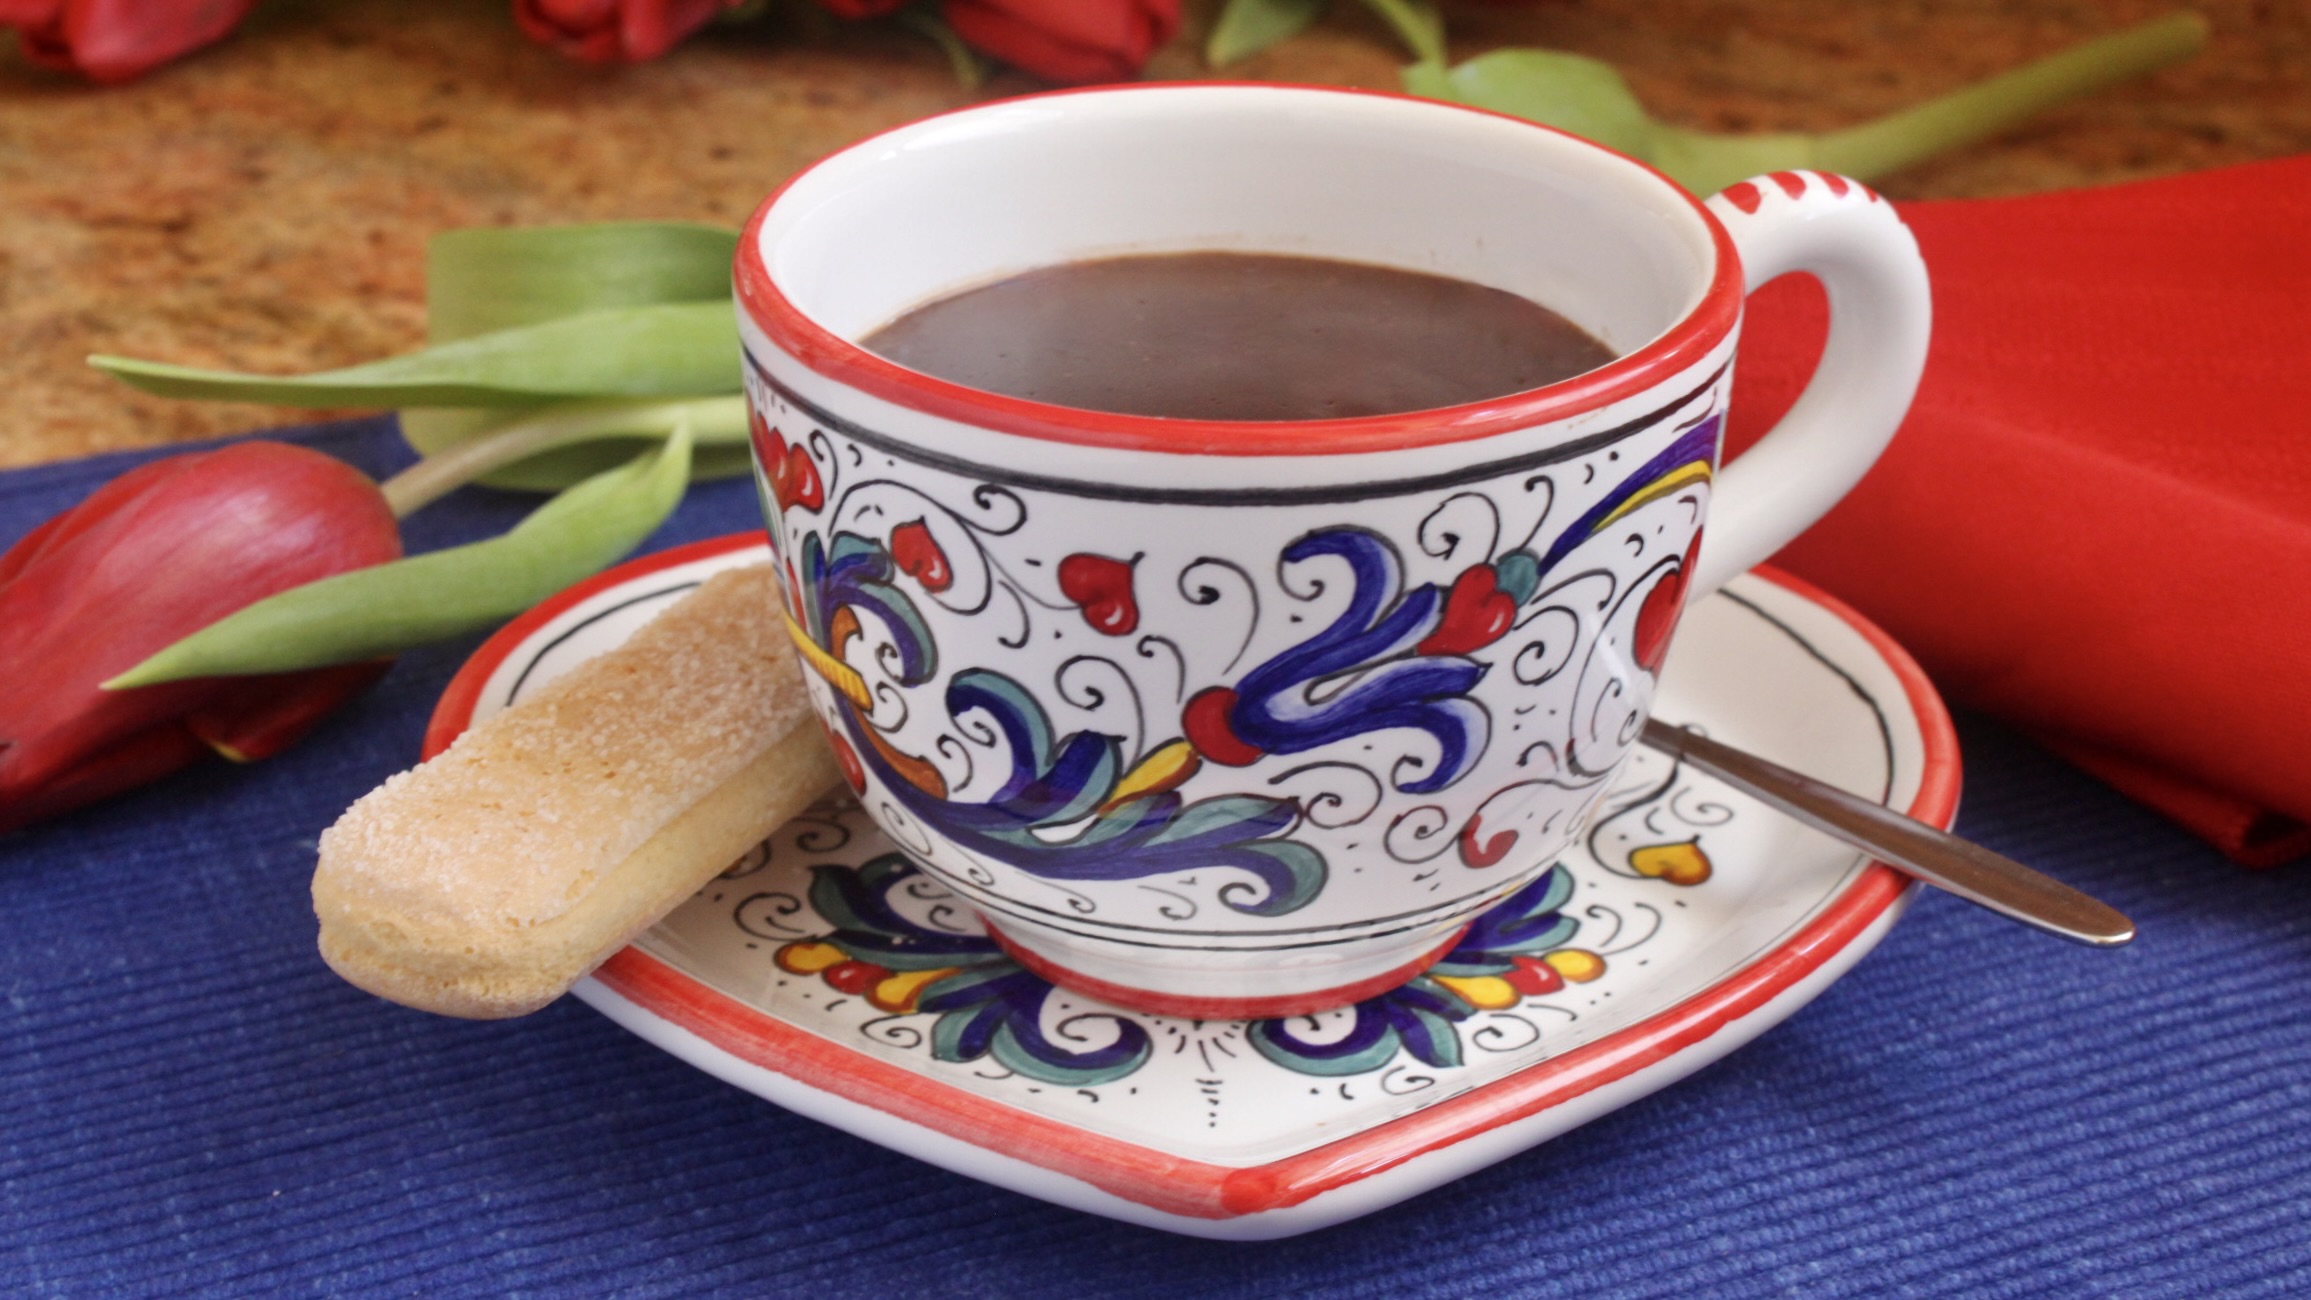 italian hot chocolate in pretty cup social